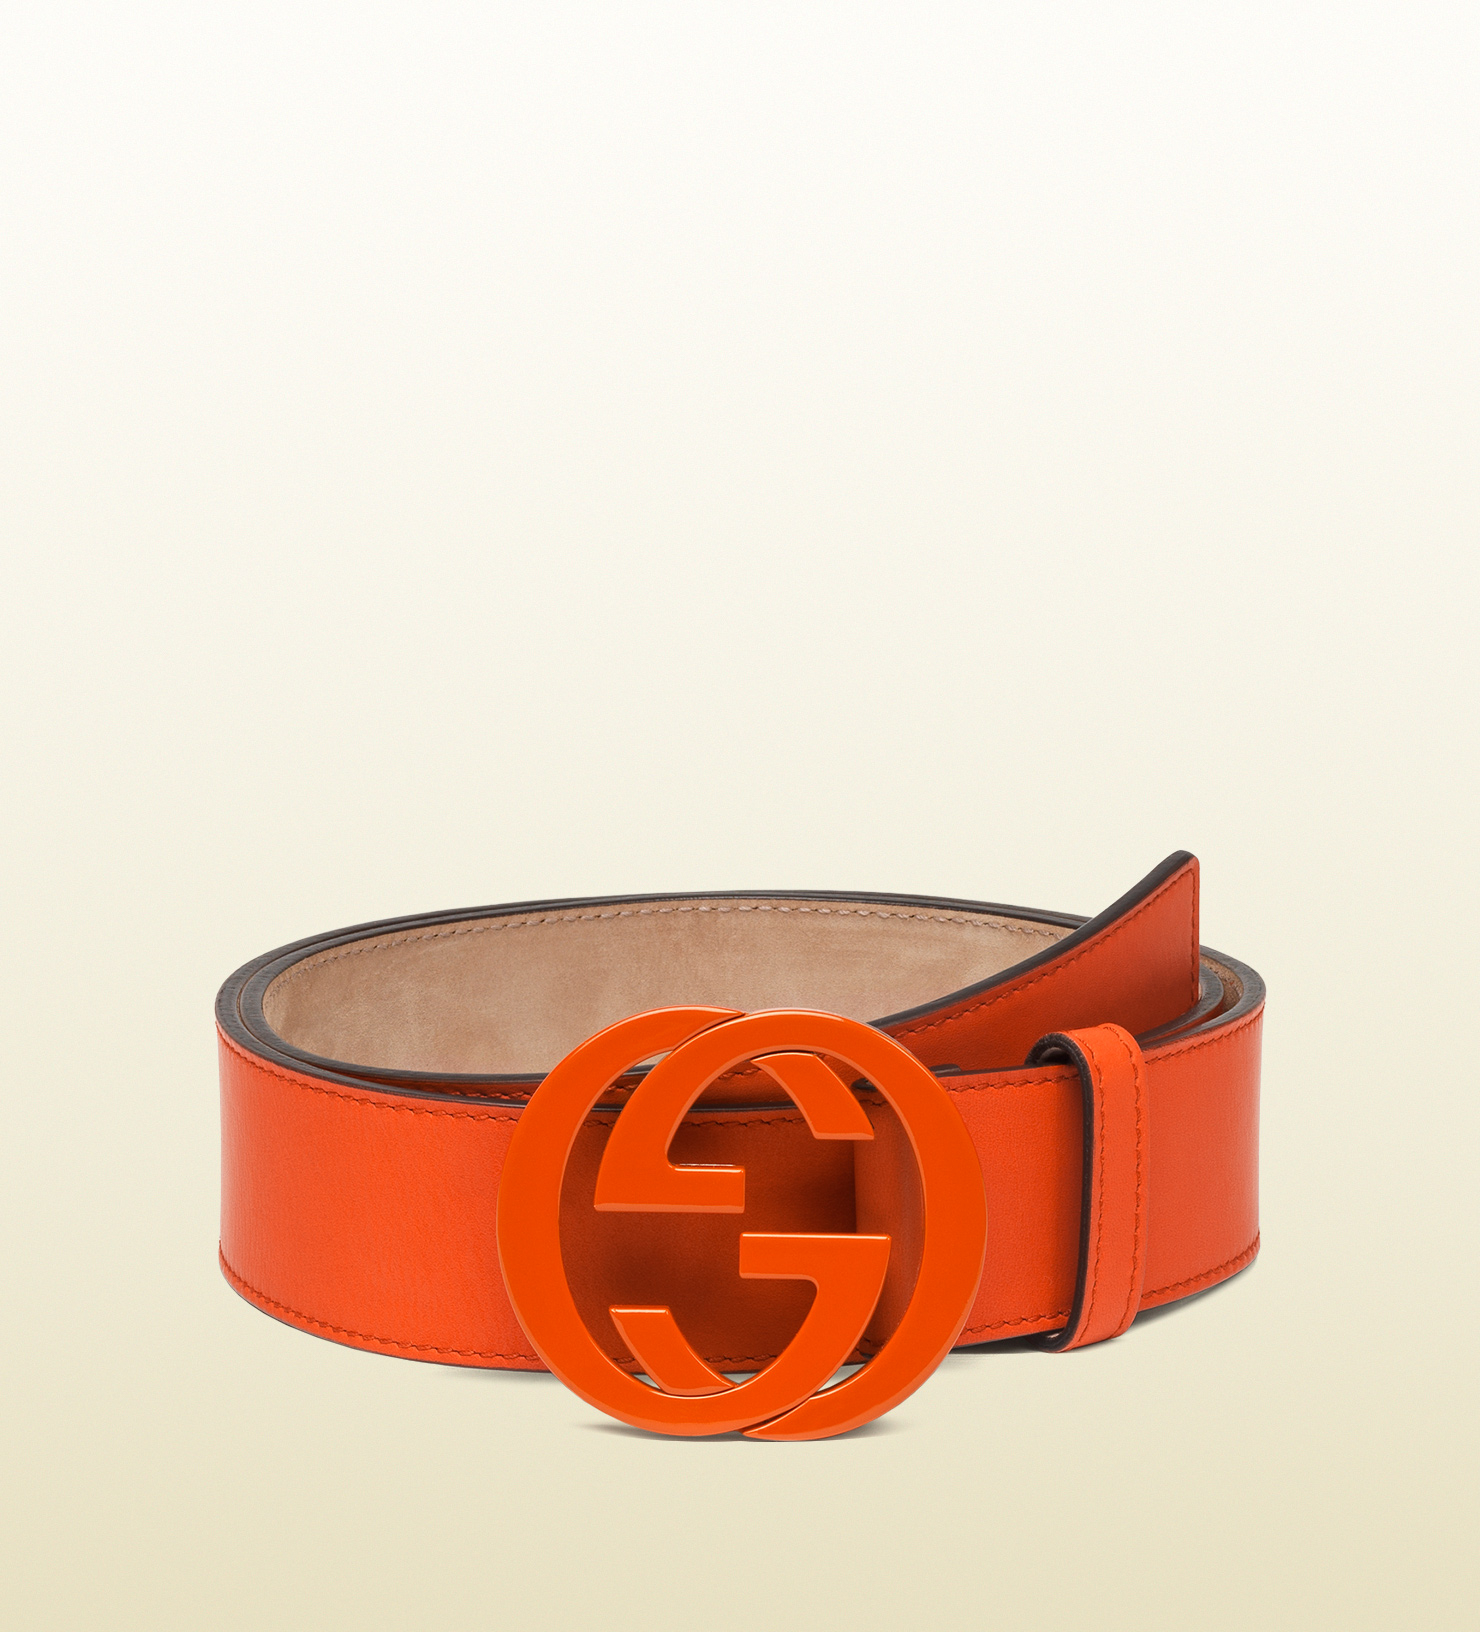 Lyst - Gucci Leather Belt with Interlocking G Buckle in Orange for Men